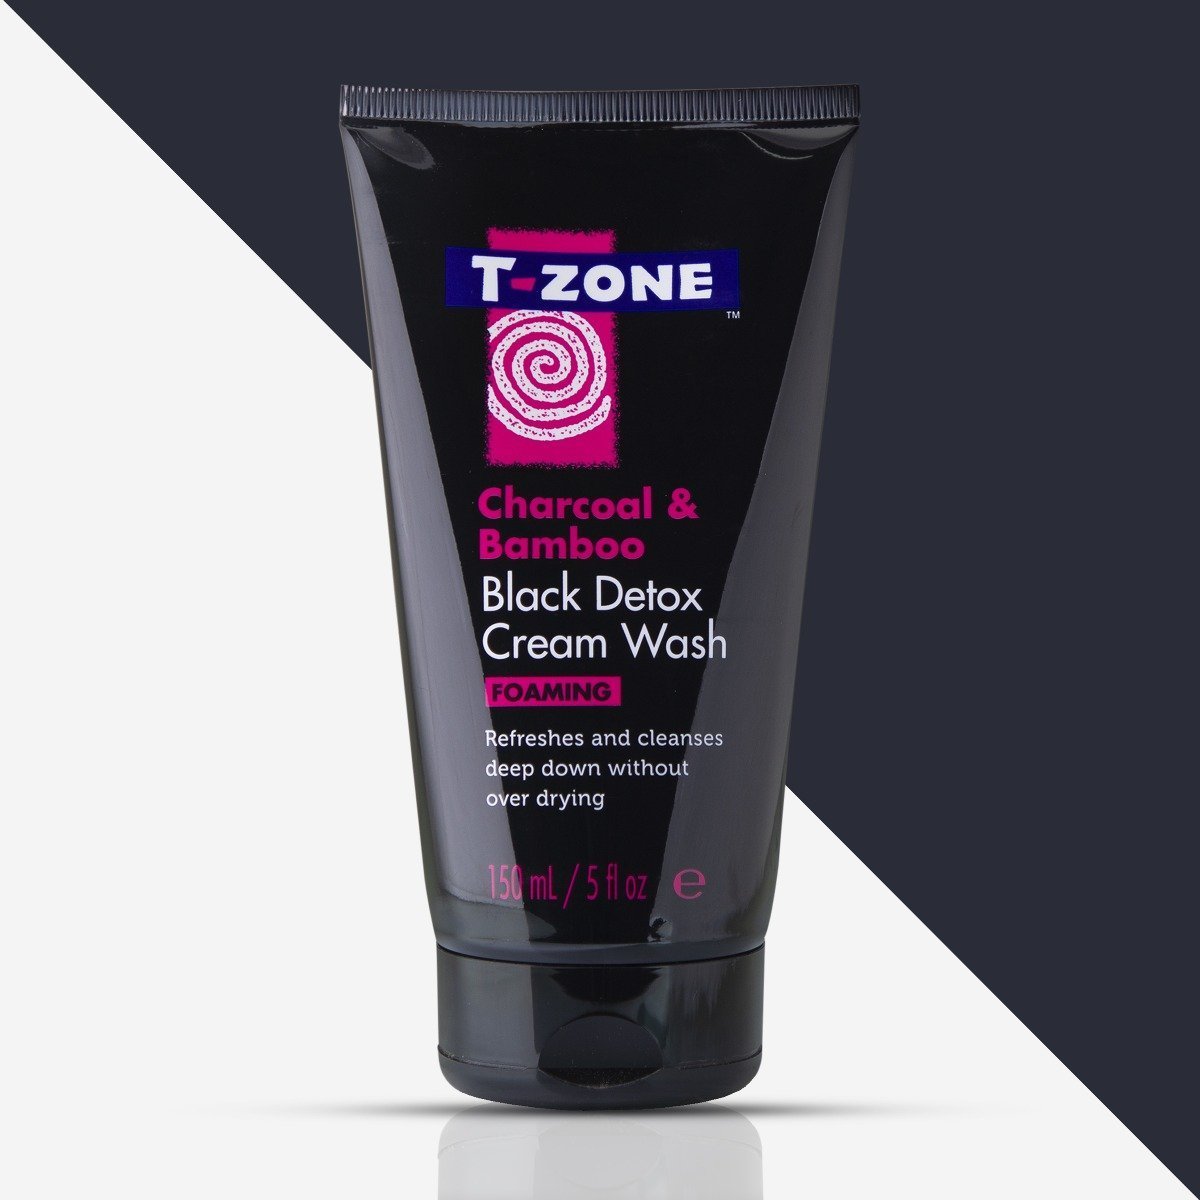 T-Zone Charcoal & Bamboo Black Detox Cream Wash